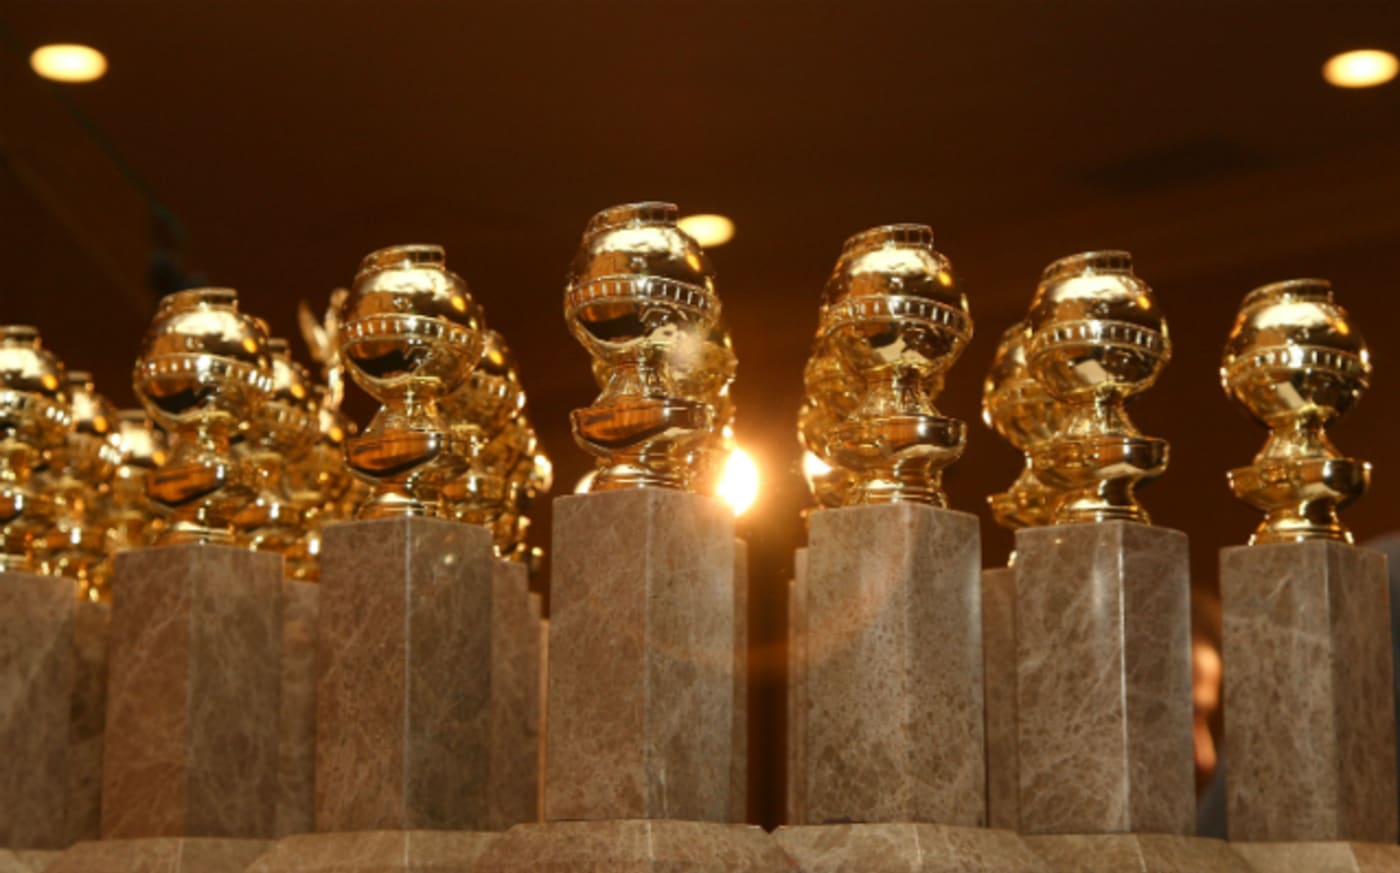 Golden Globes statues